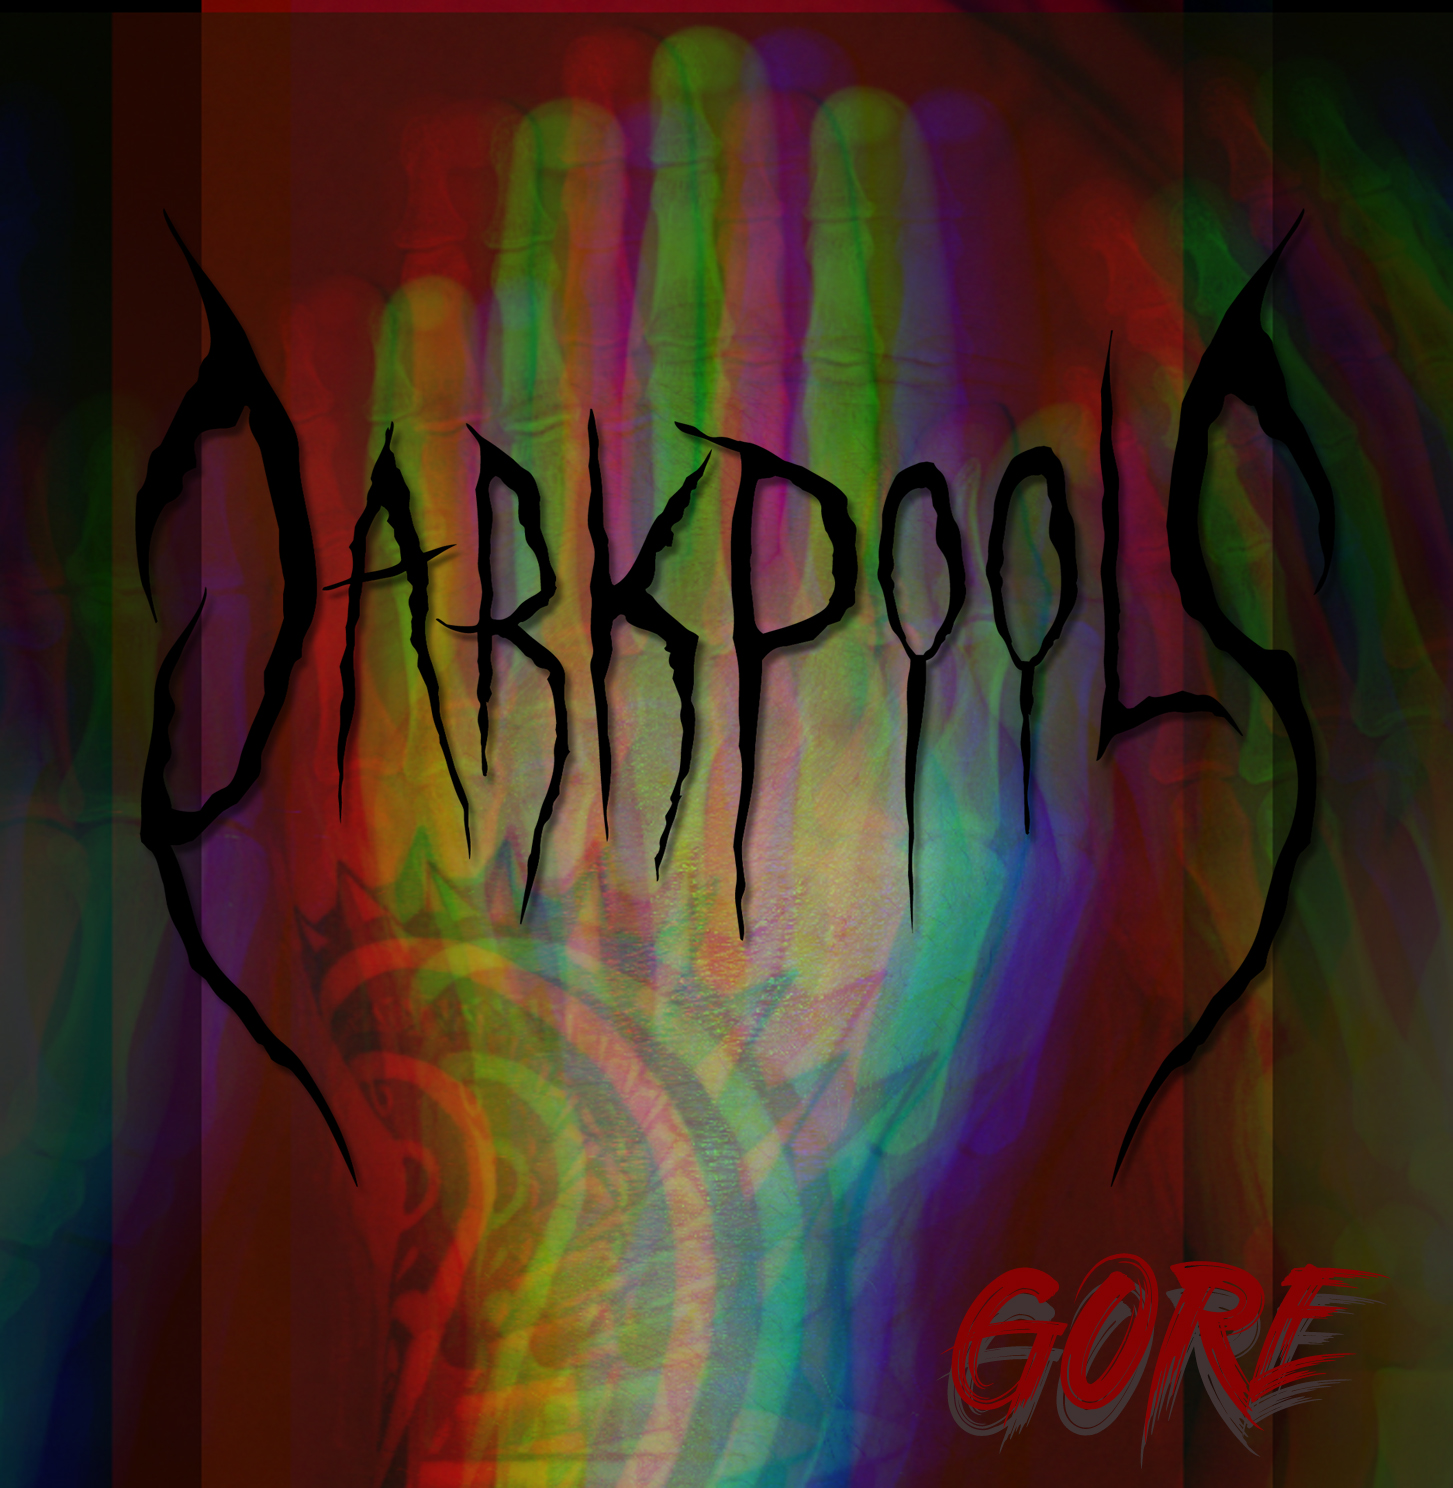 Darkpools – “Gore”